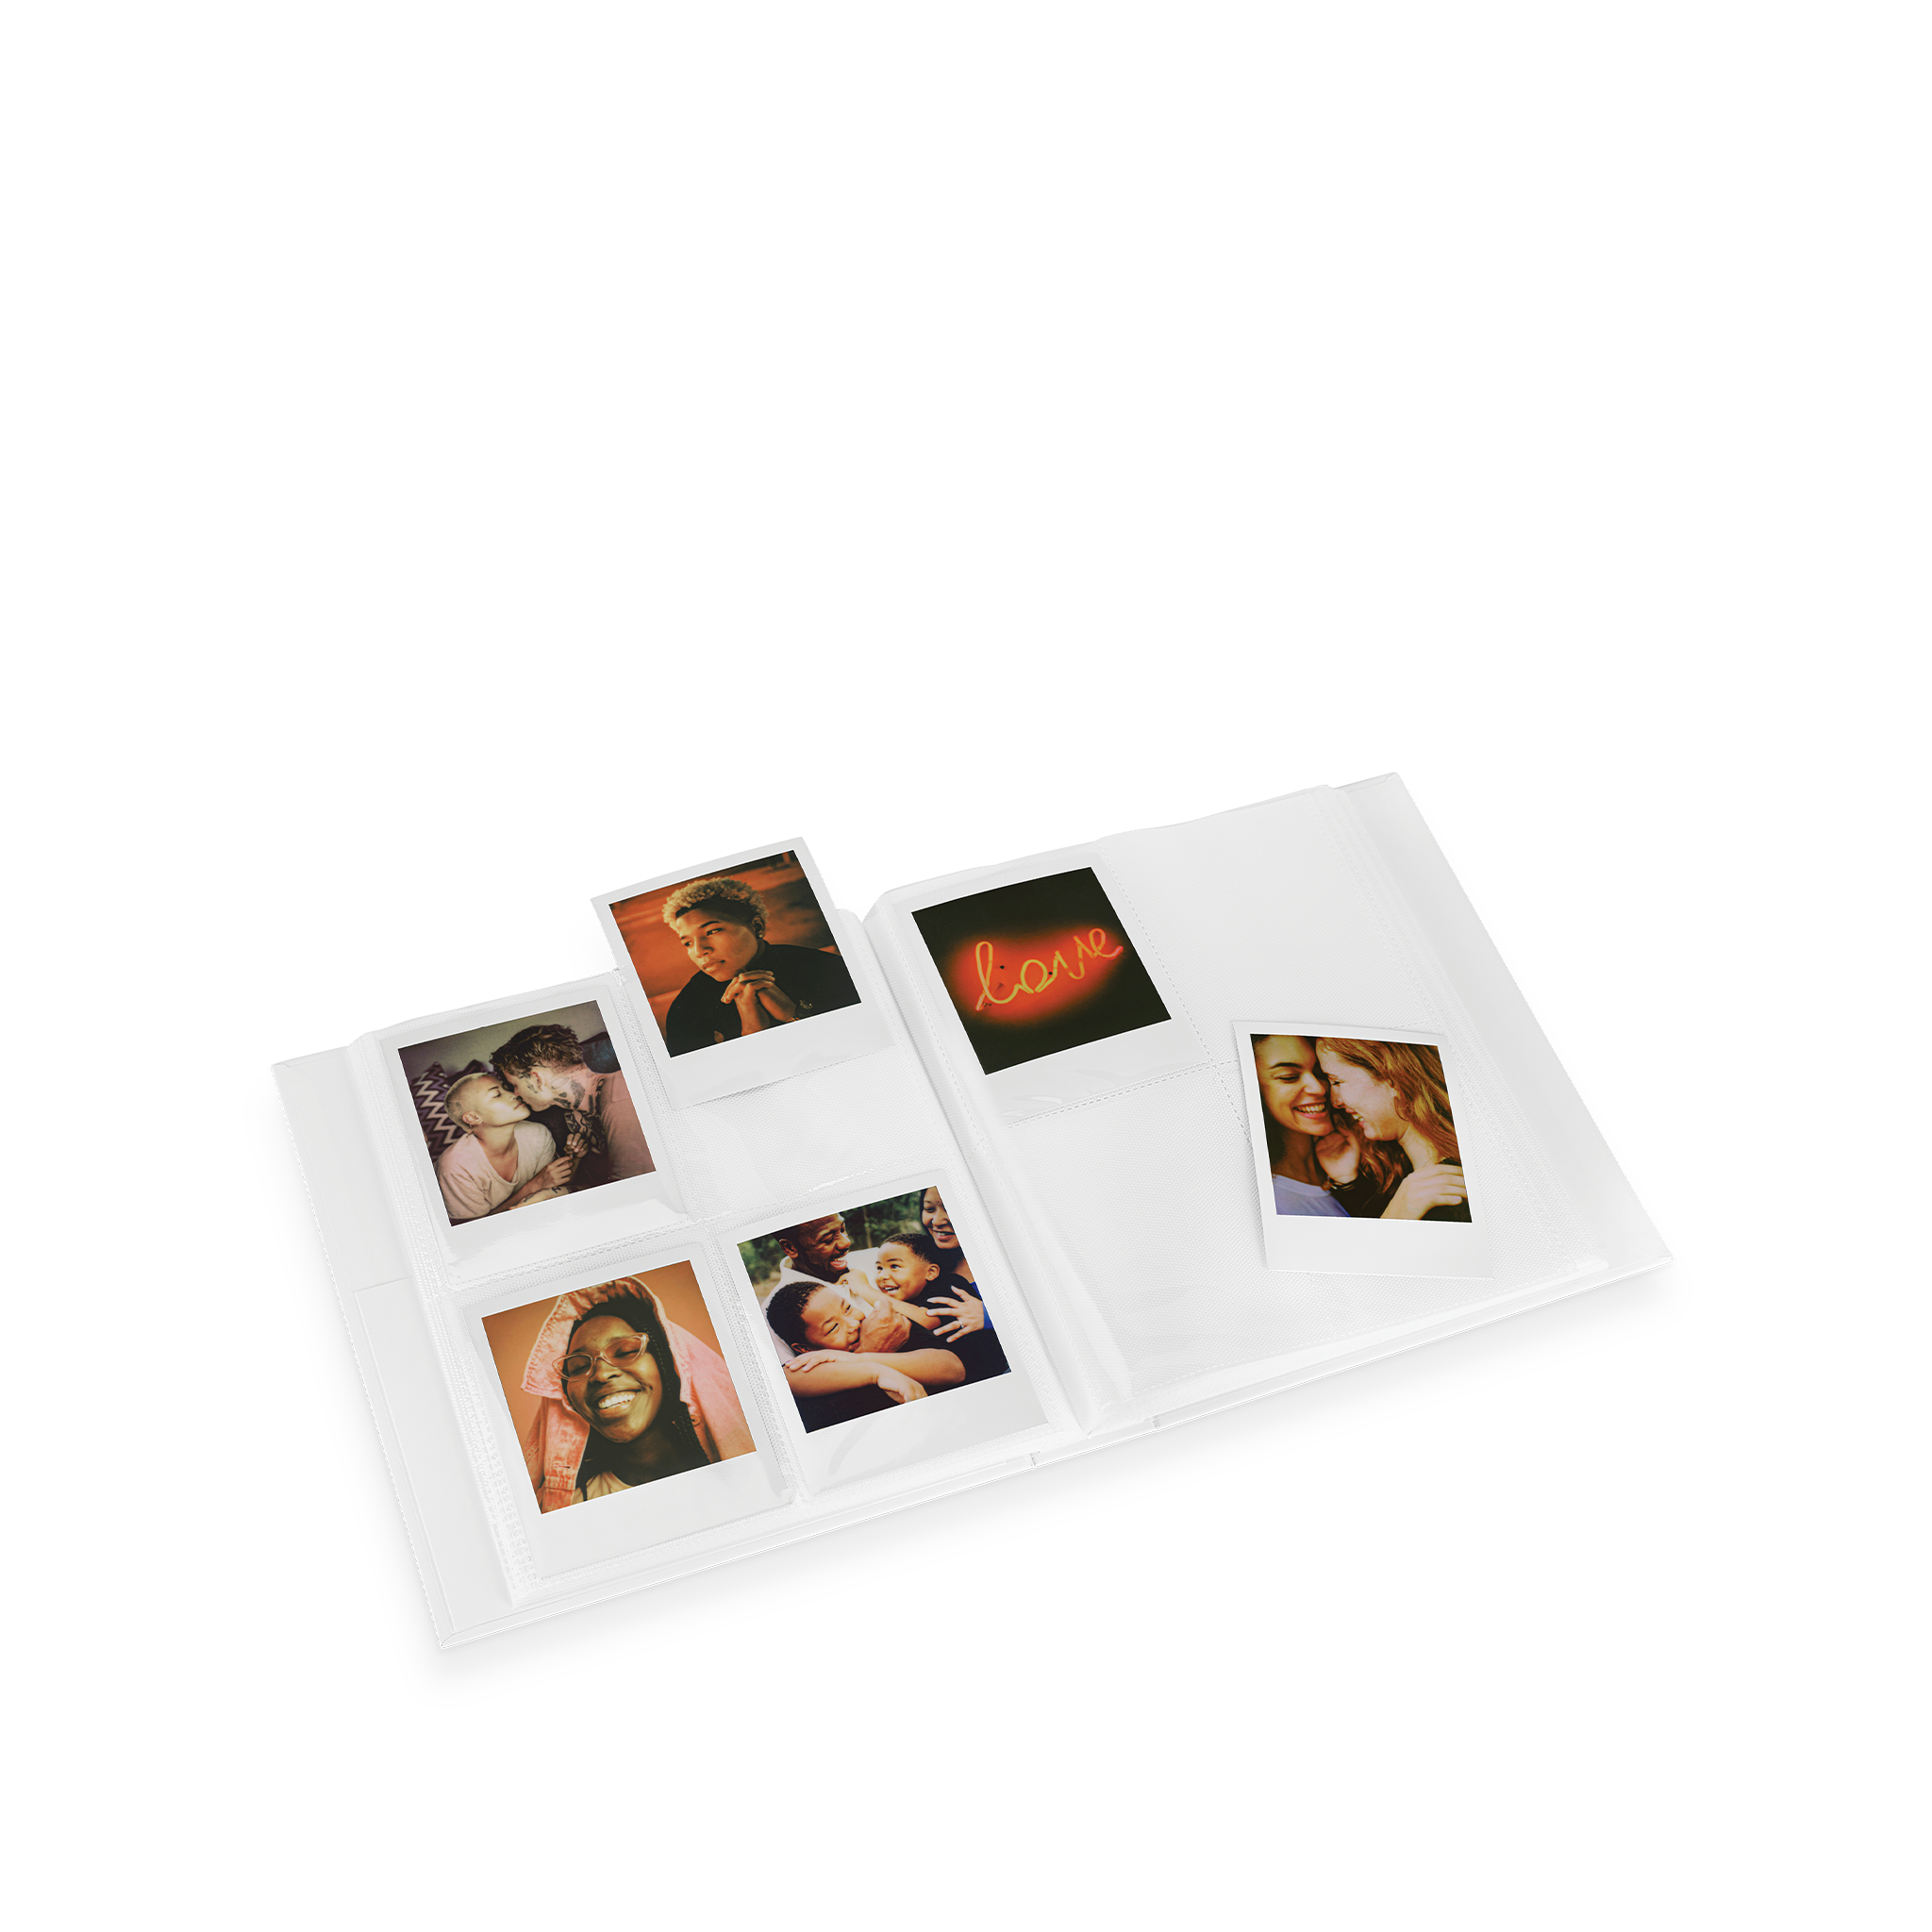 Discover the Polaroid Photo Albums